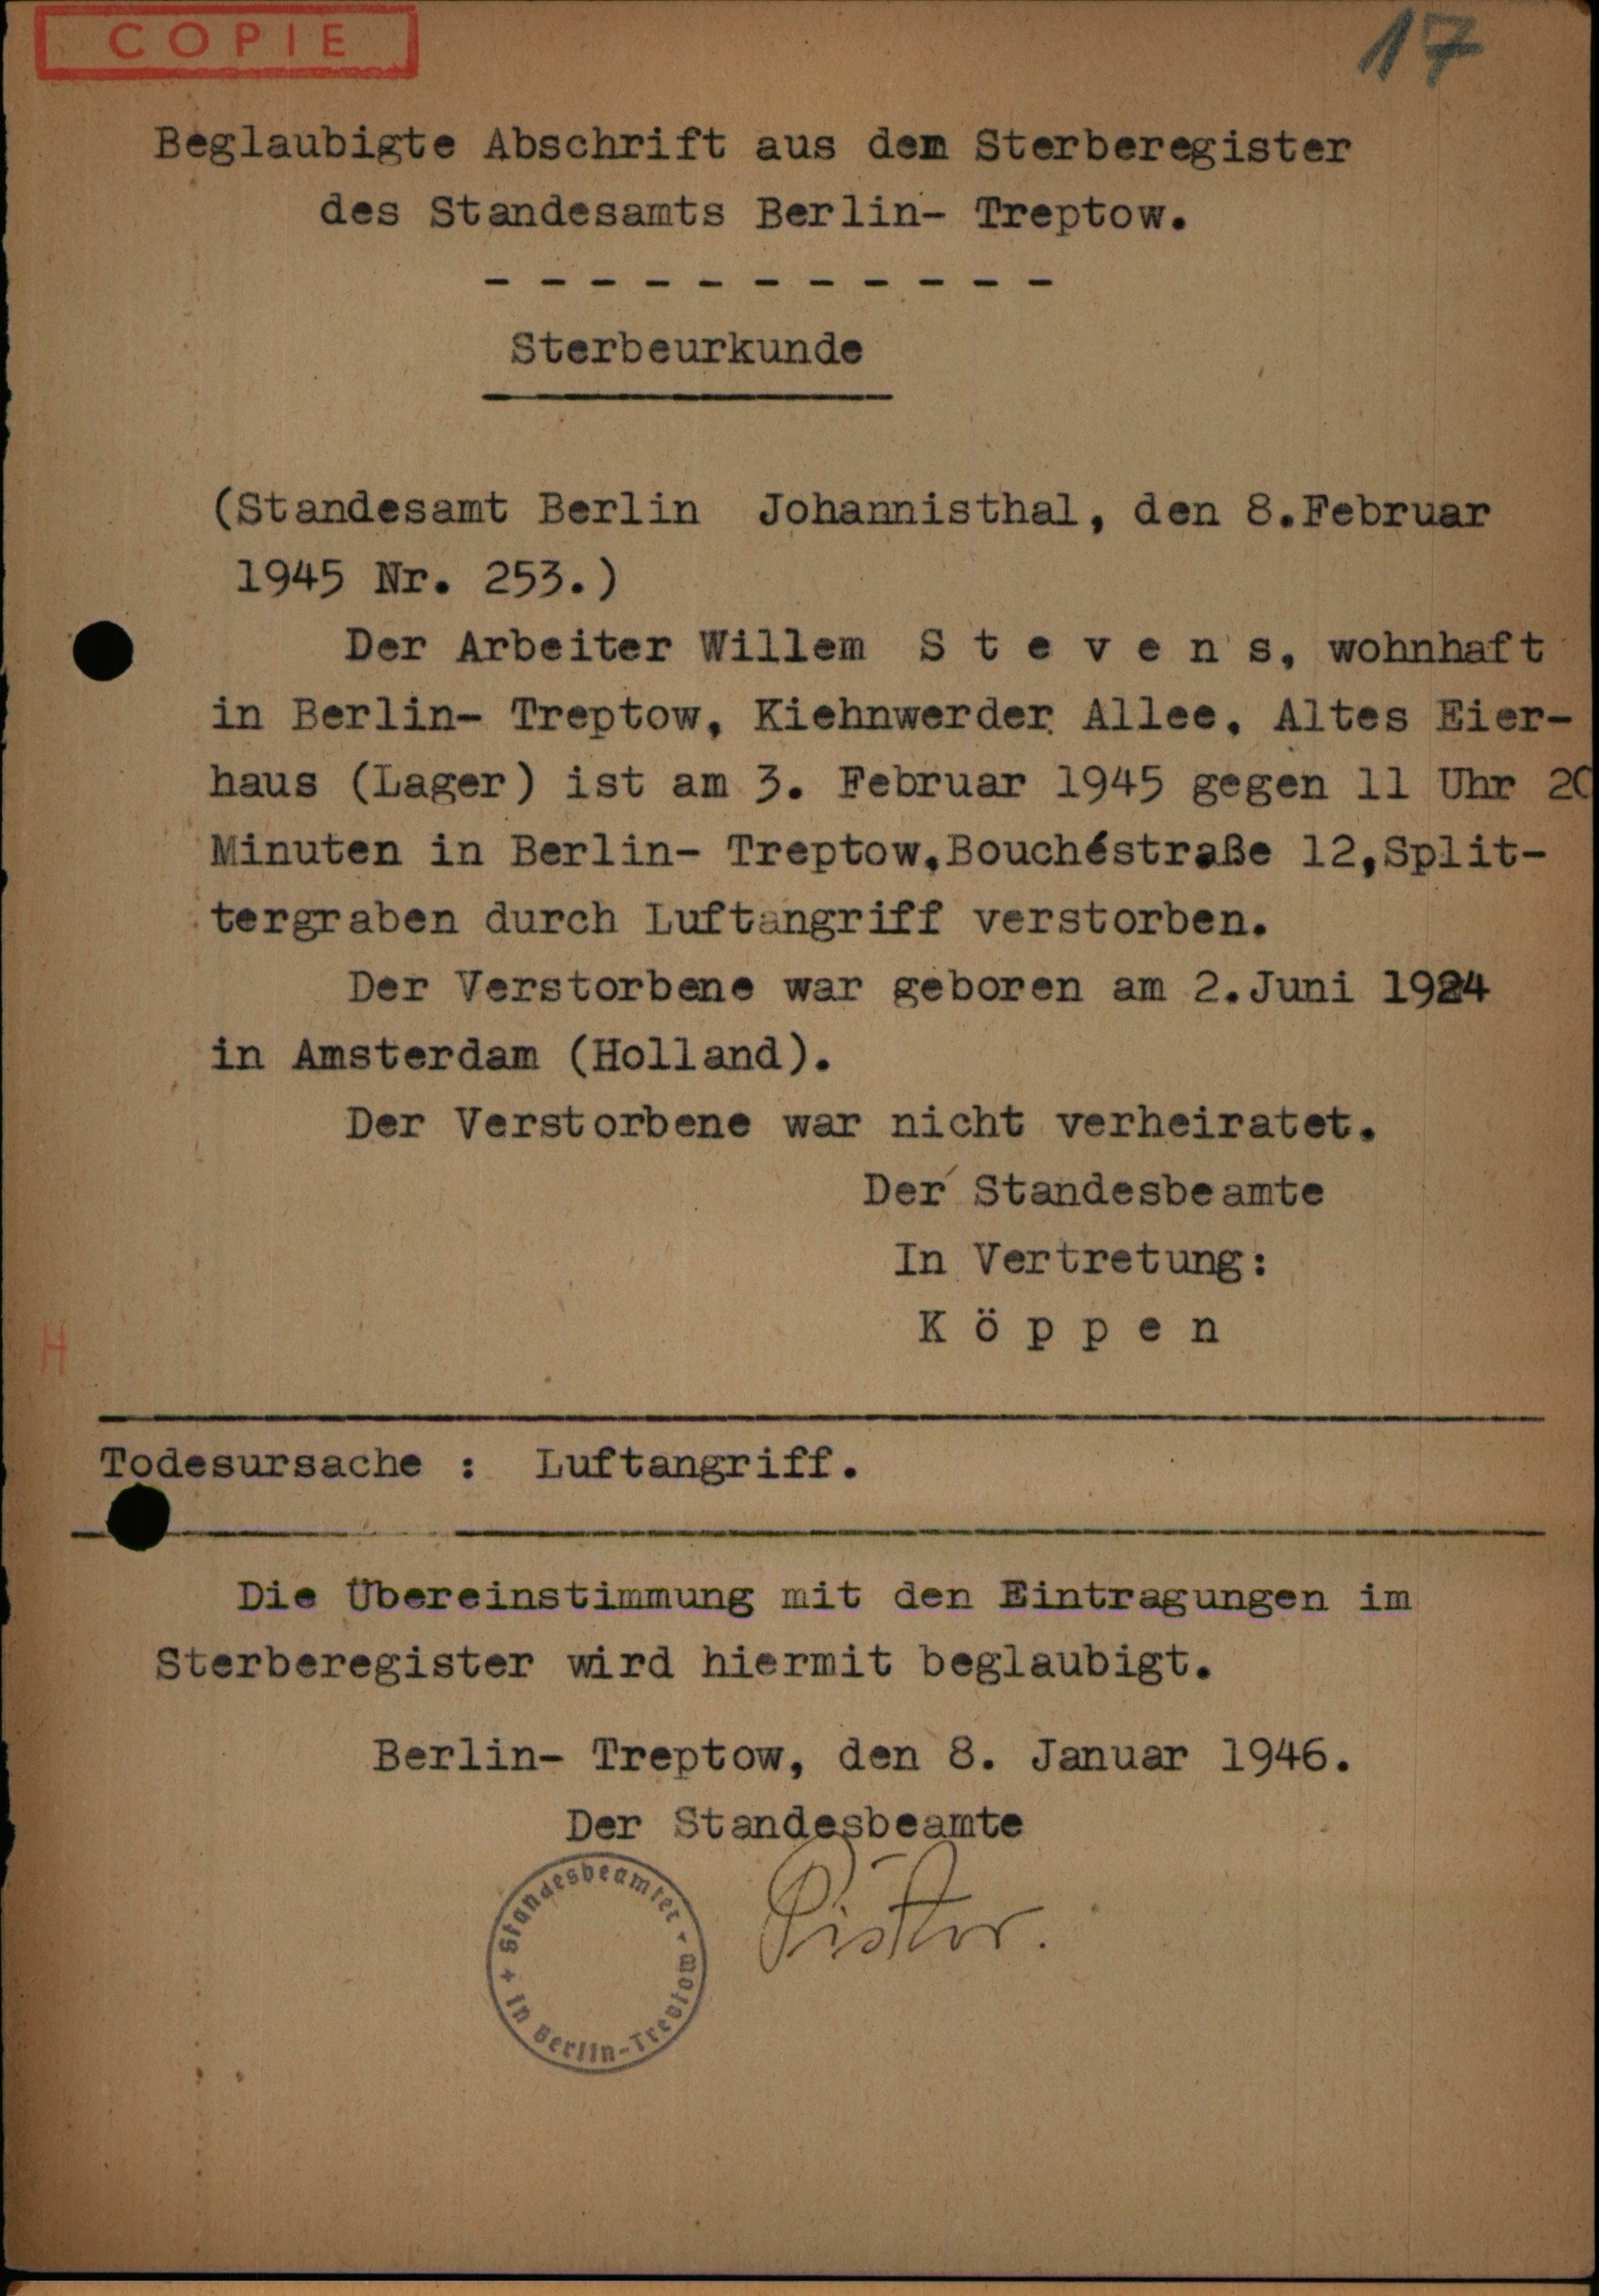 death certificate of Willem Stevens